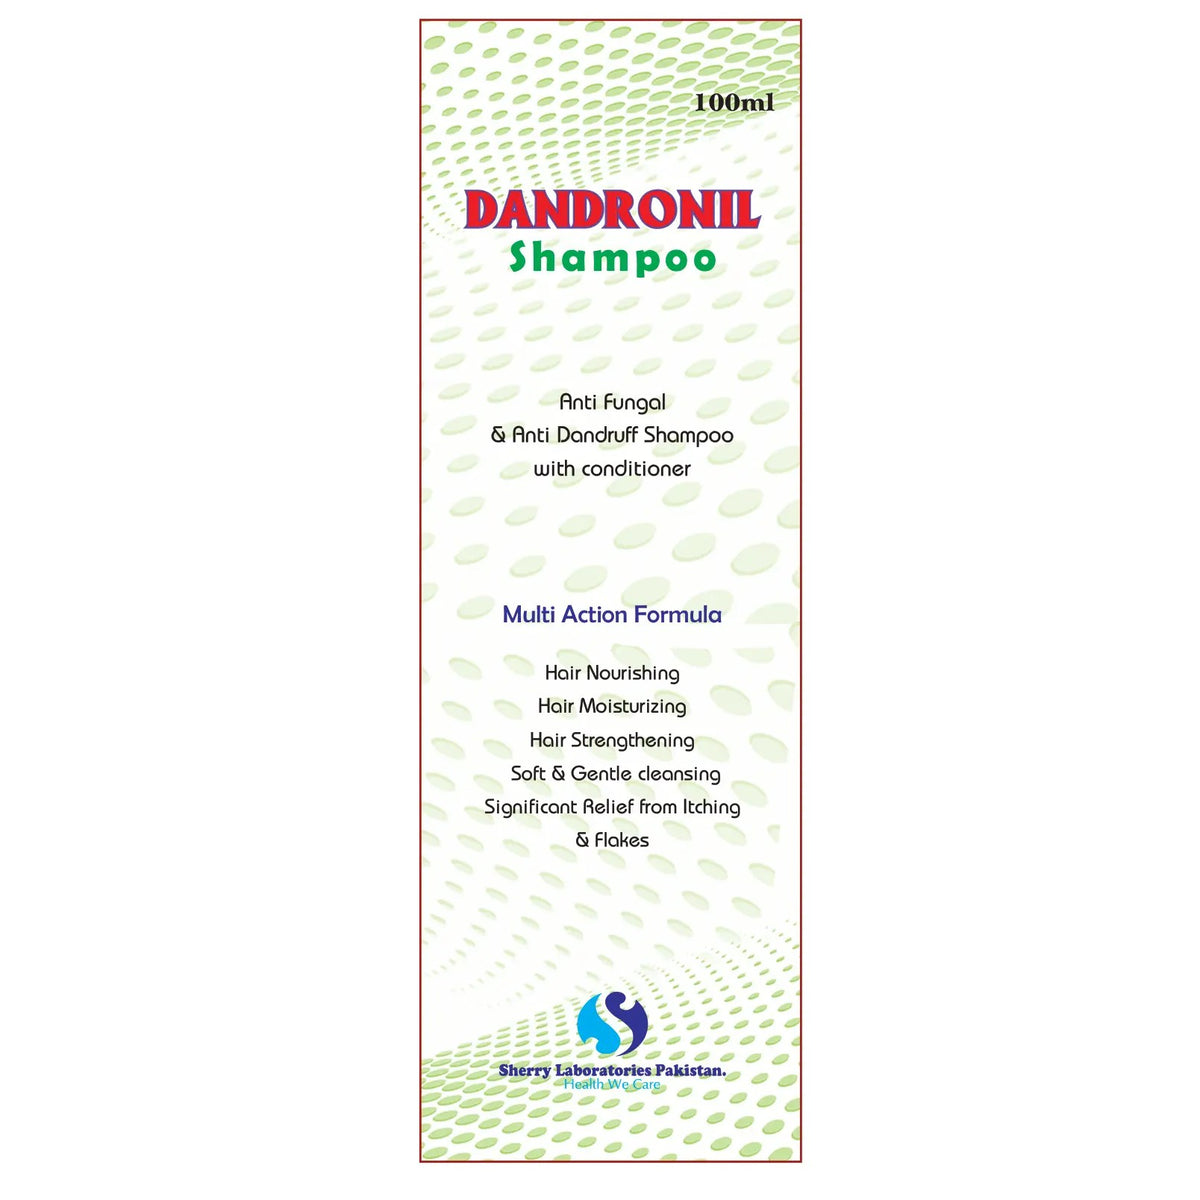 Dandronil Shampoo 100mL